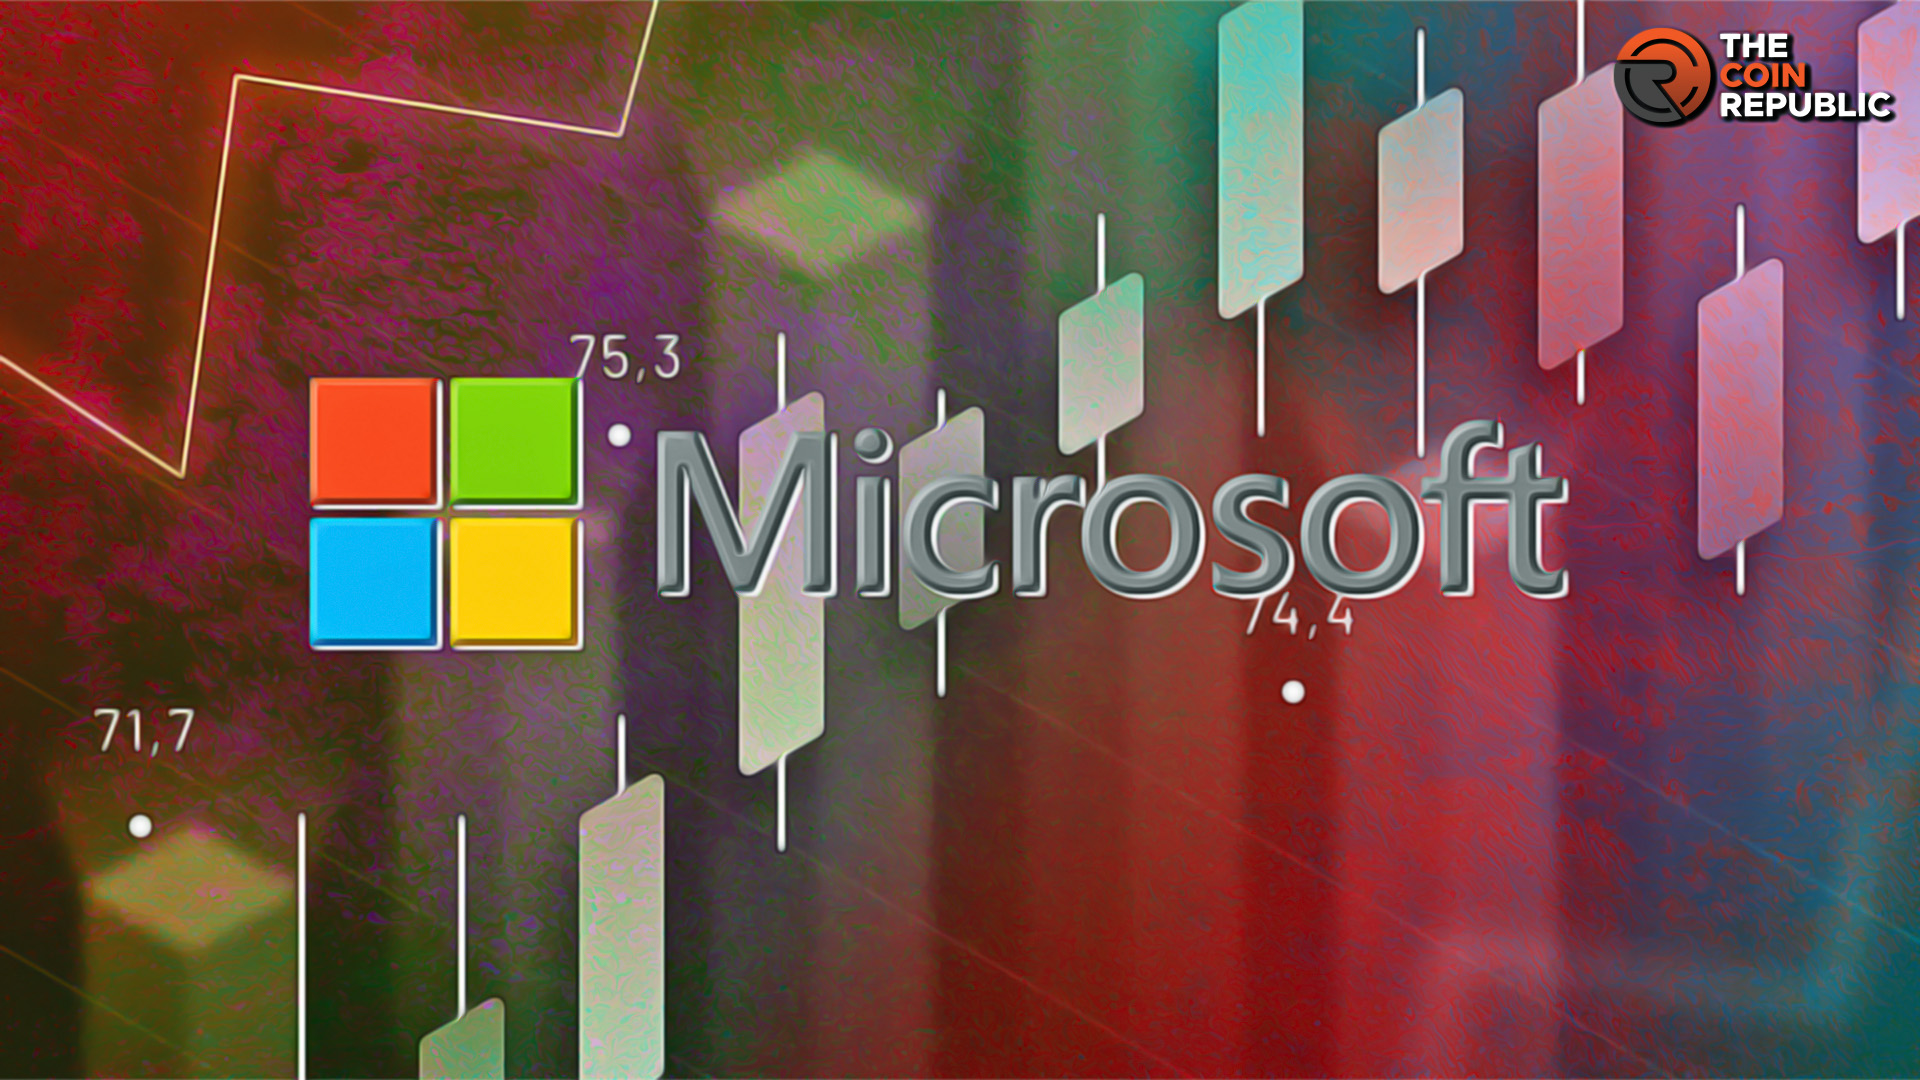 Microsoft Stock: MSFT Stock prepares for a short-term correction